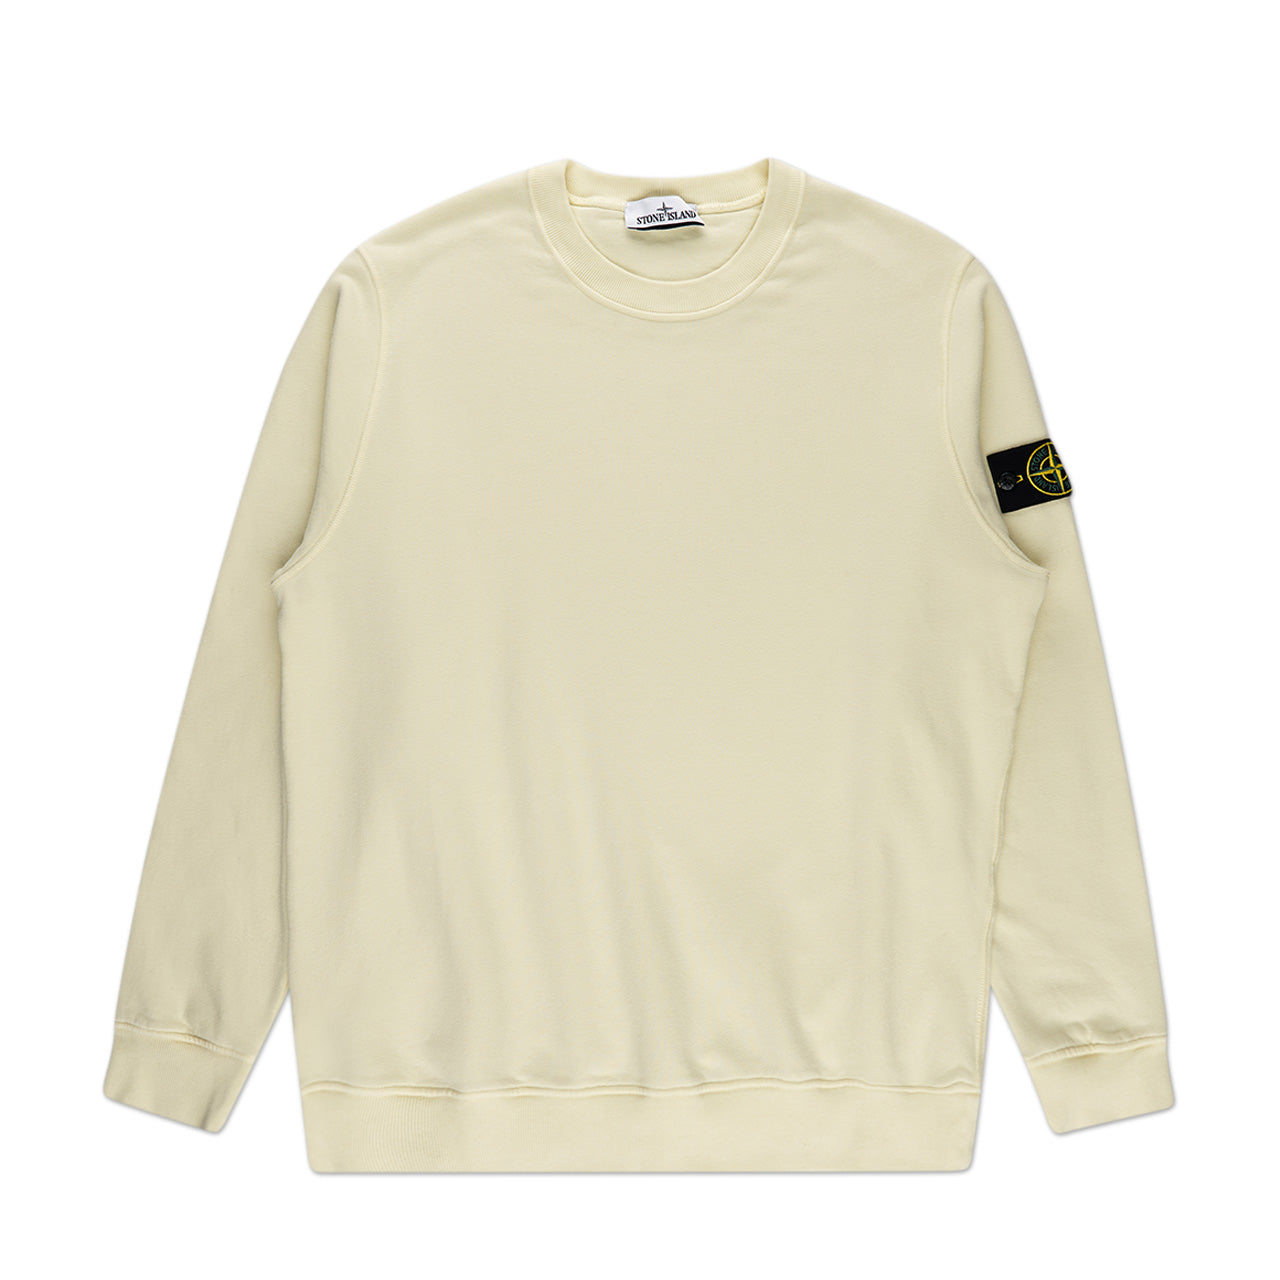 stone island sweatshirt (light yellow)